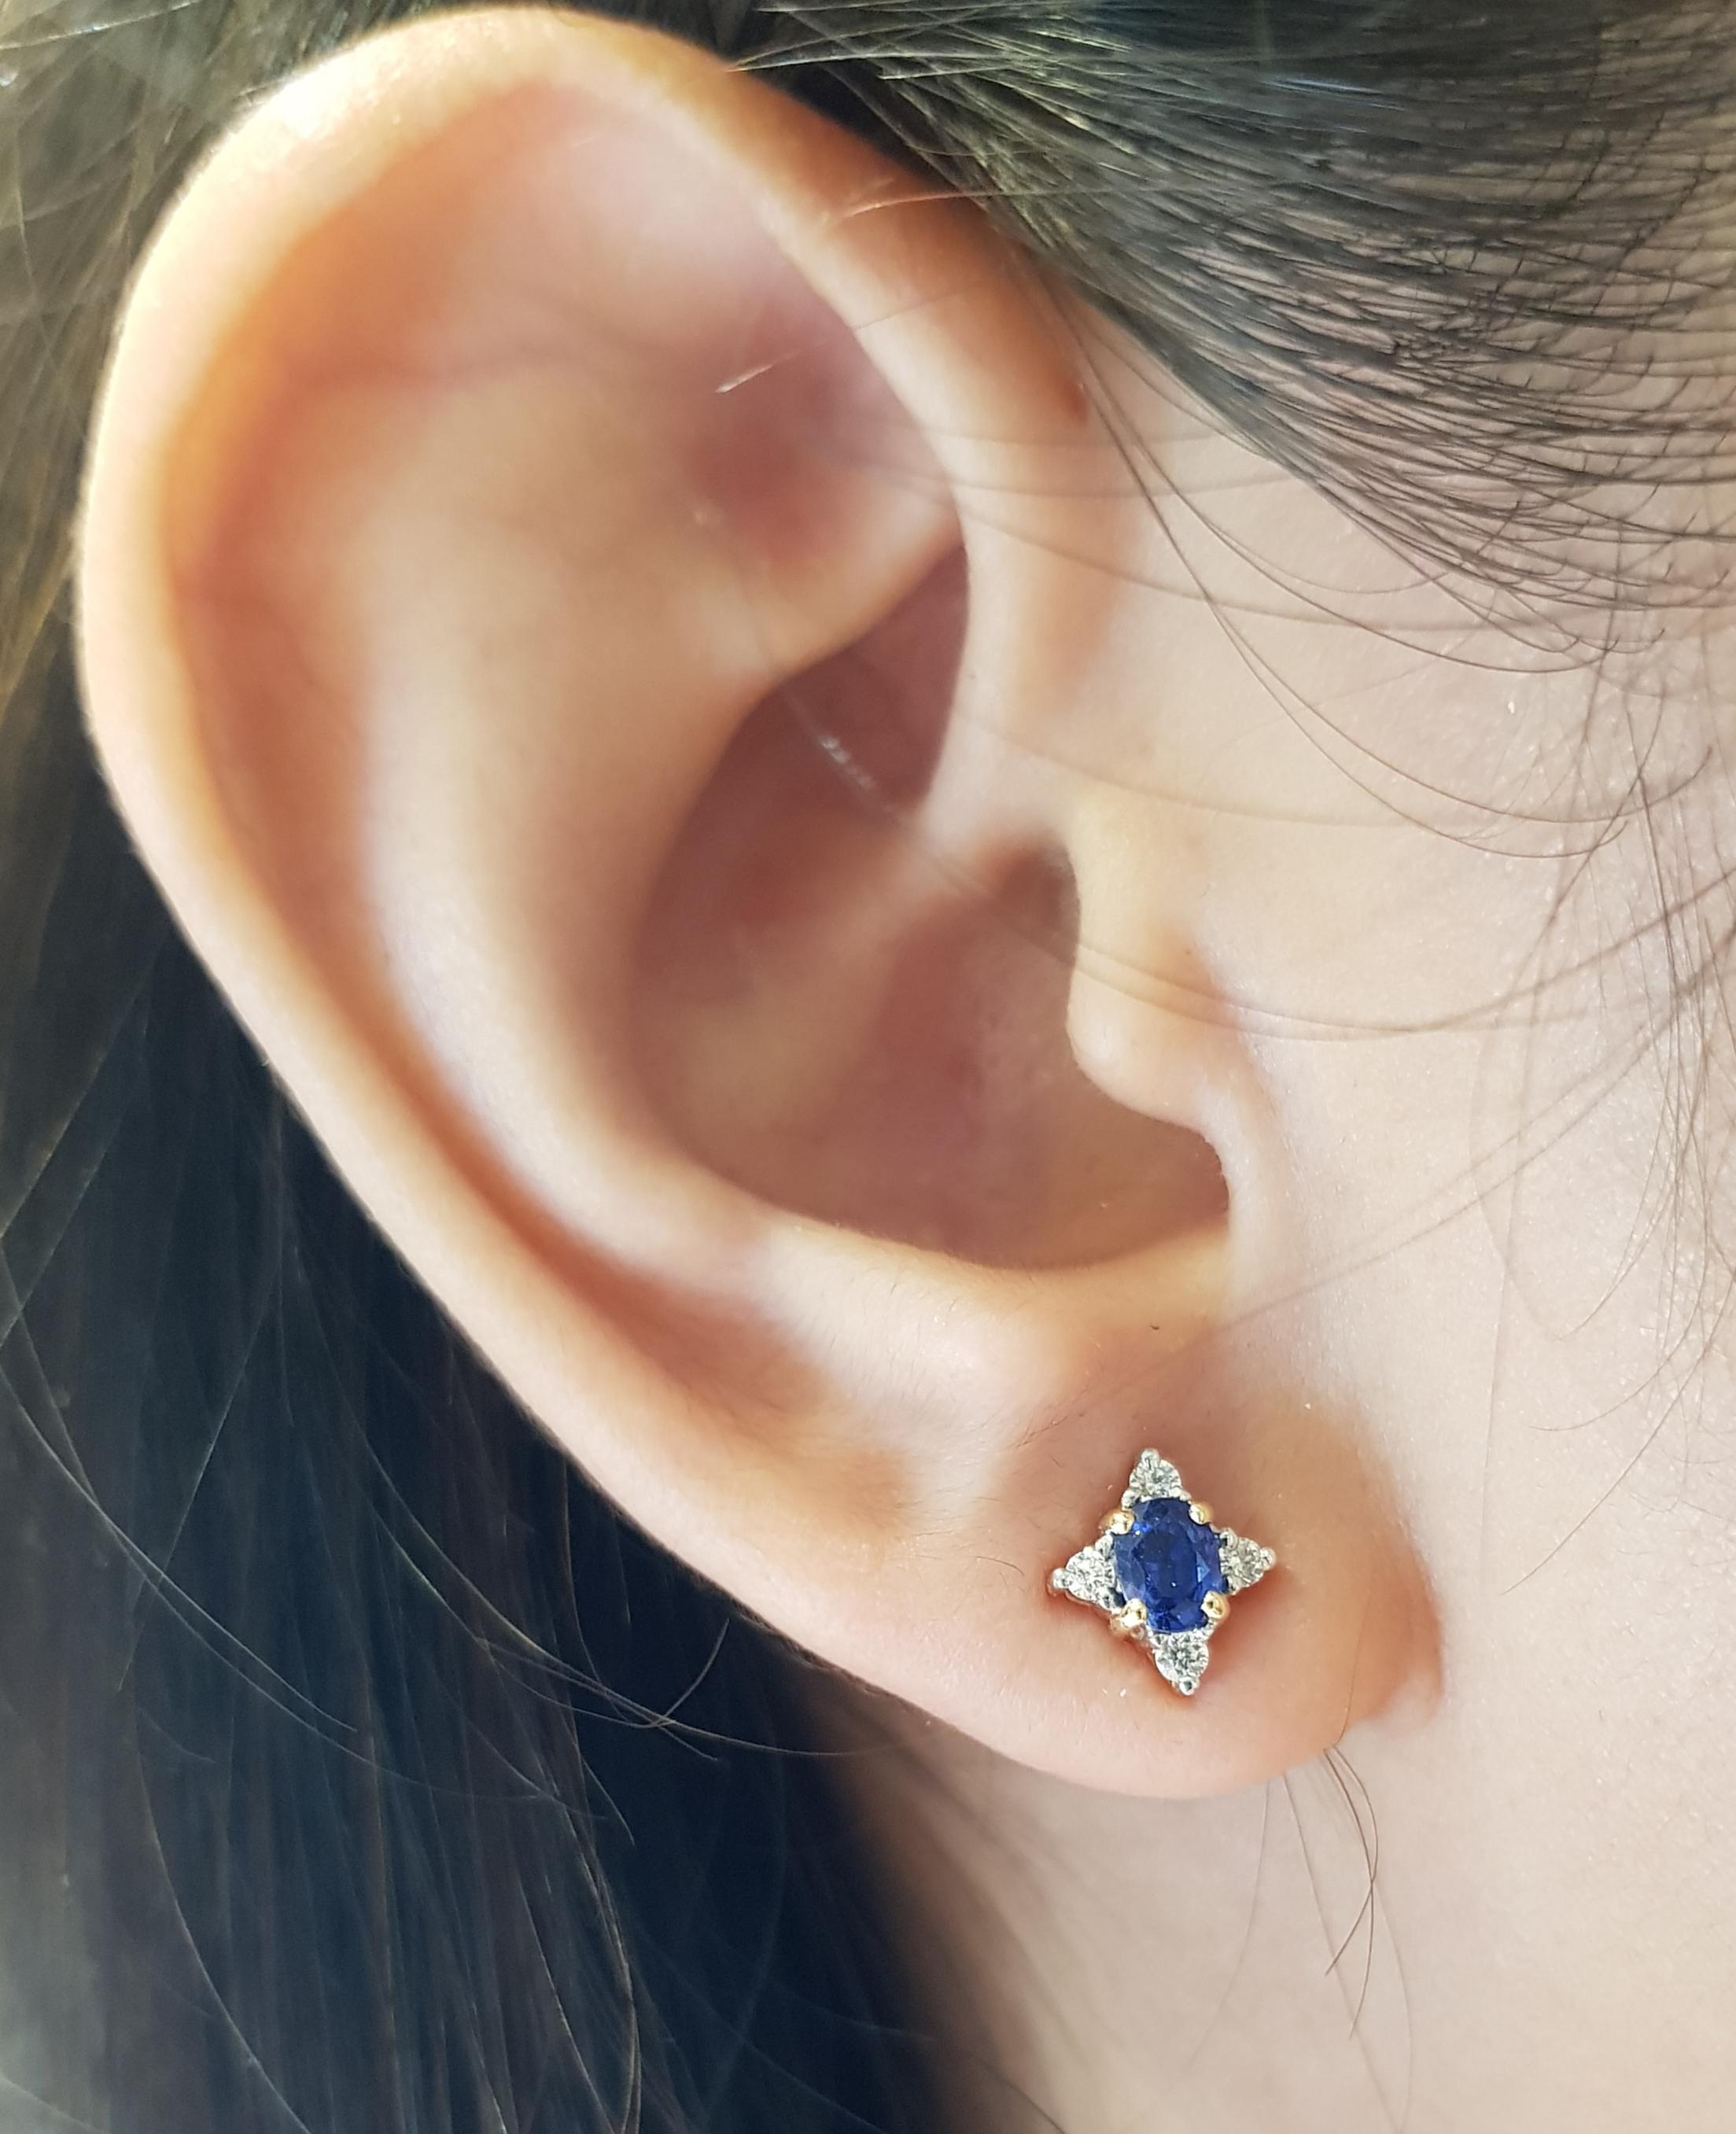 Blue Sapphire 0.70 carat with Diamond 0.15 carat Earrings set in 18 Karat Gold Settings

Width:  0.8 cm 
Length:  0.9 cm
Total Weight: 2.03 grams

